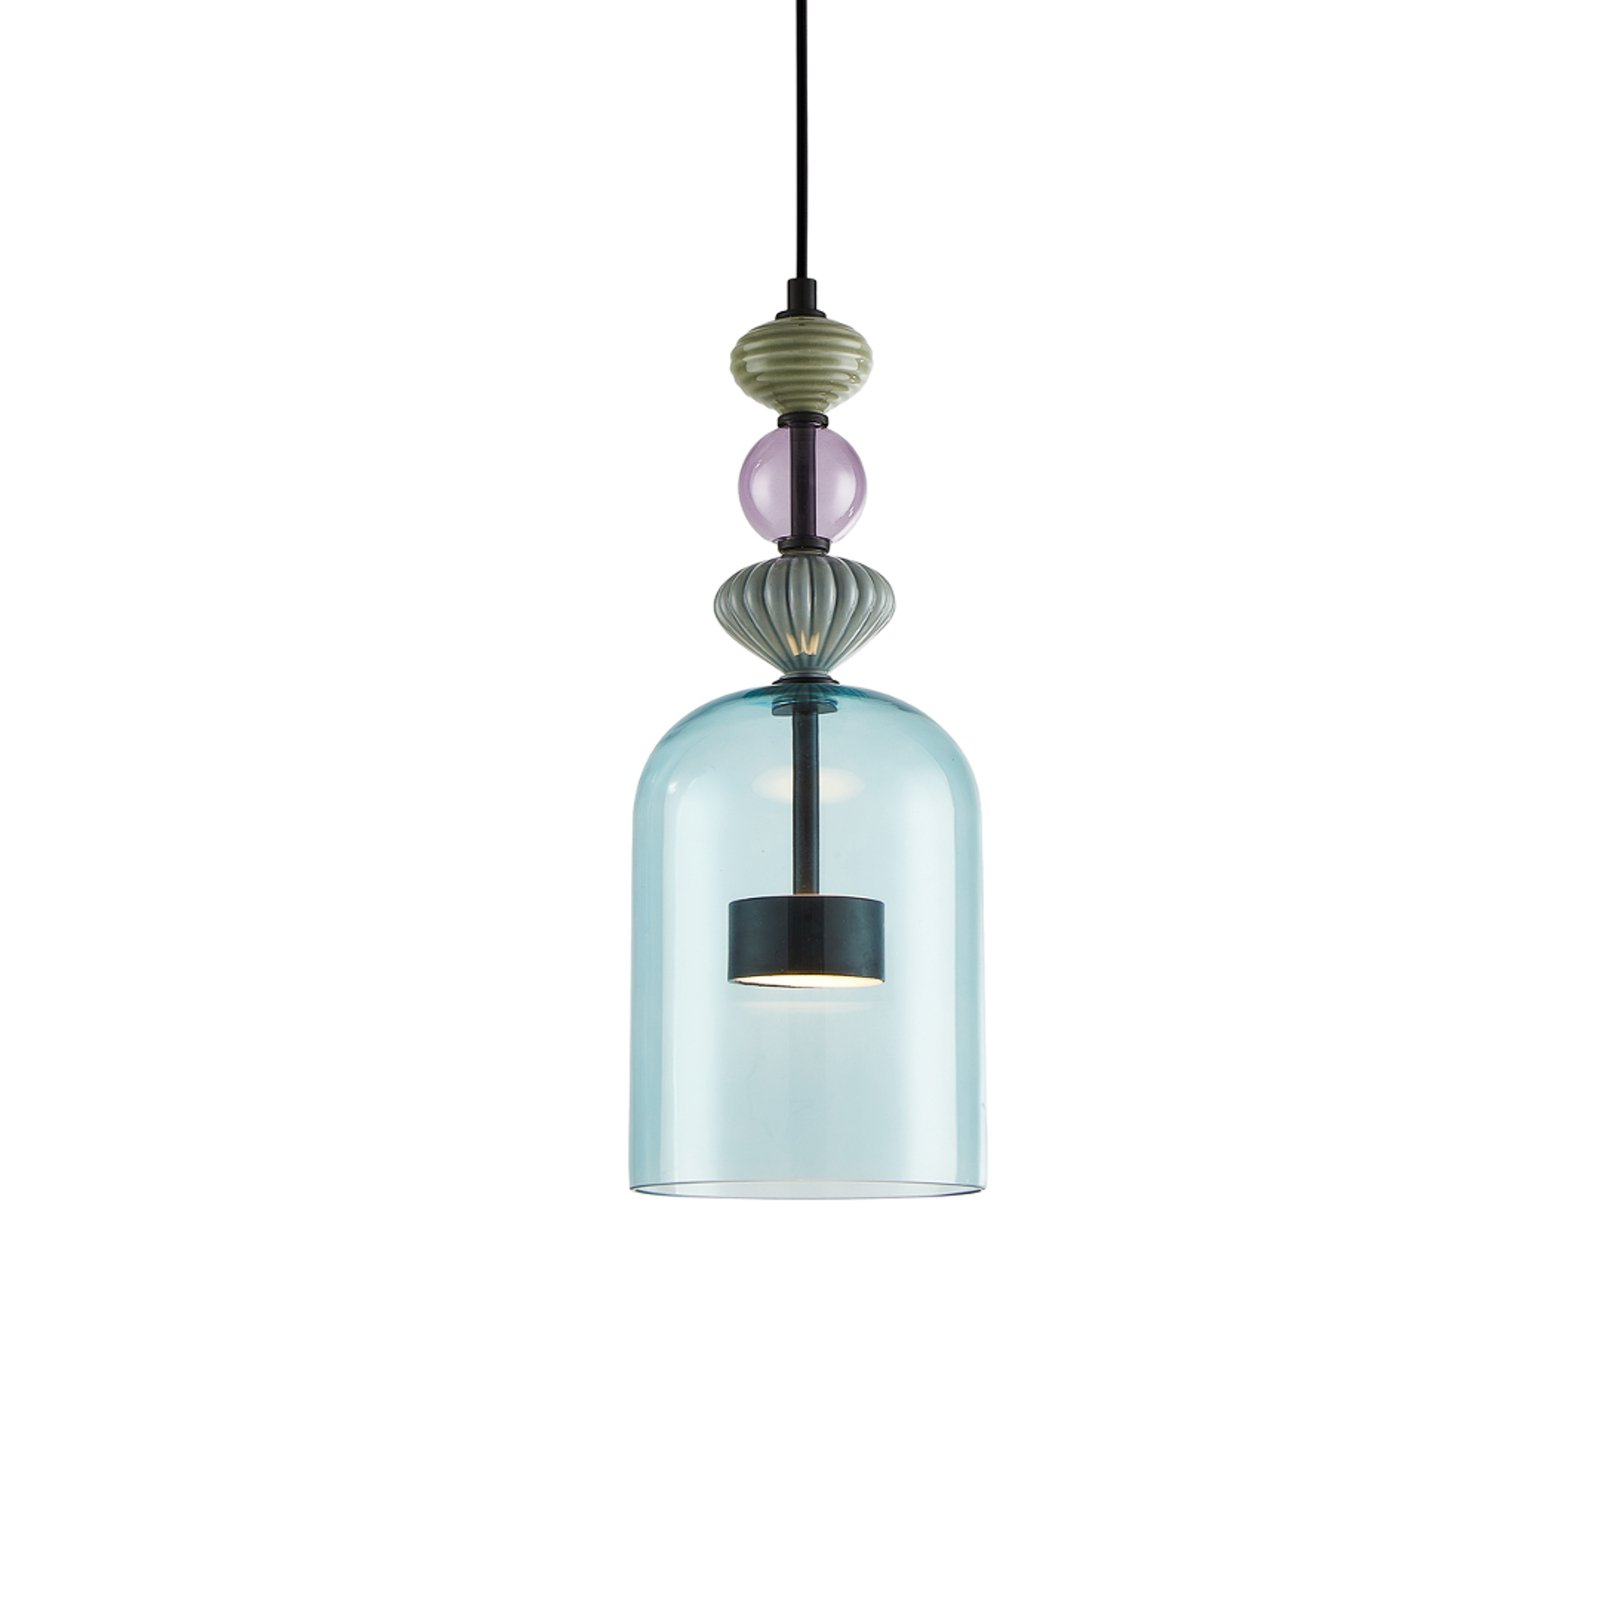 LED hanging light Arte, glass lampshade, blue, Ø 16 cm, 12 W